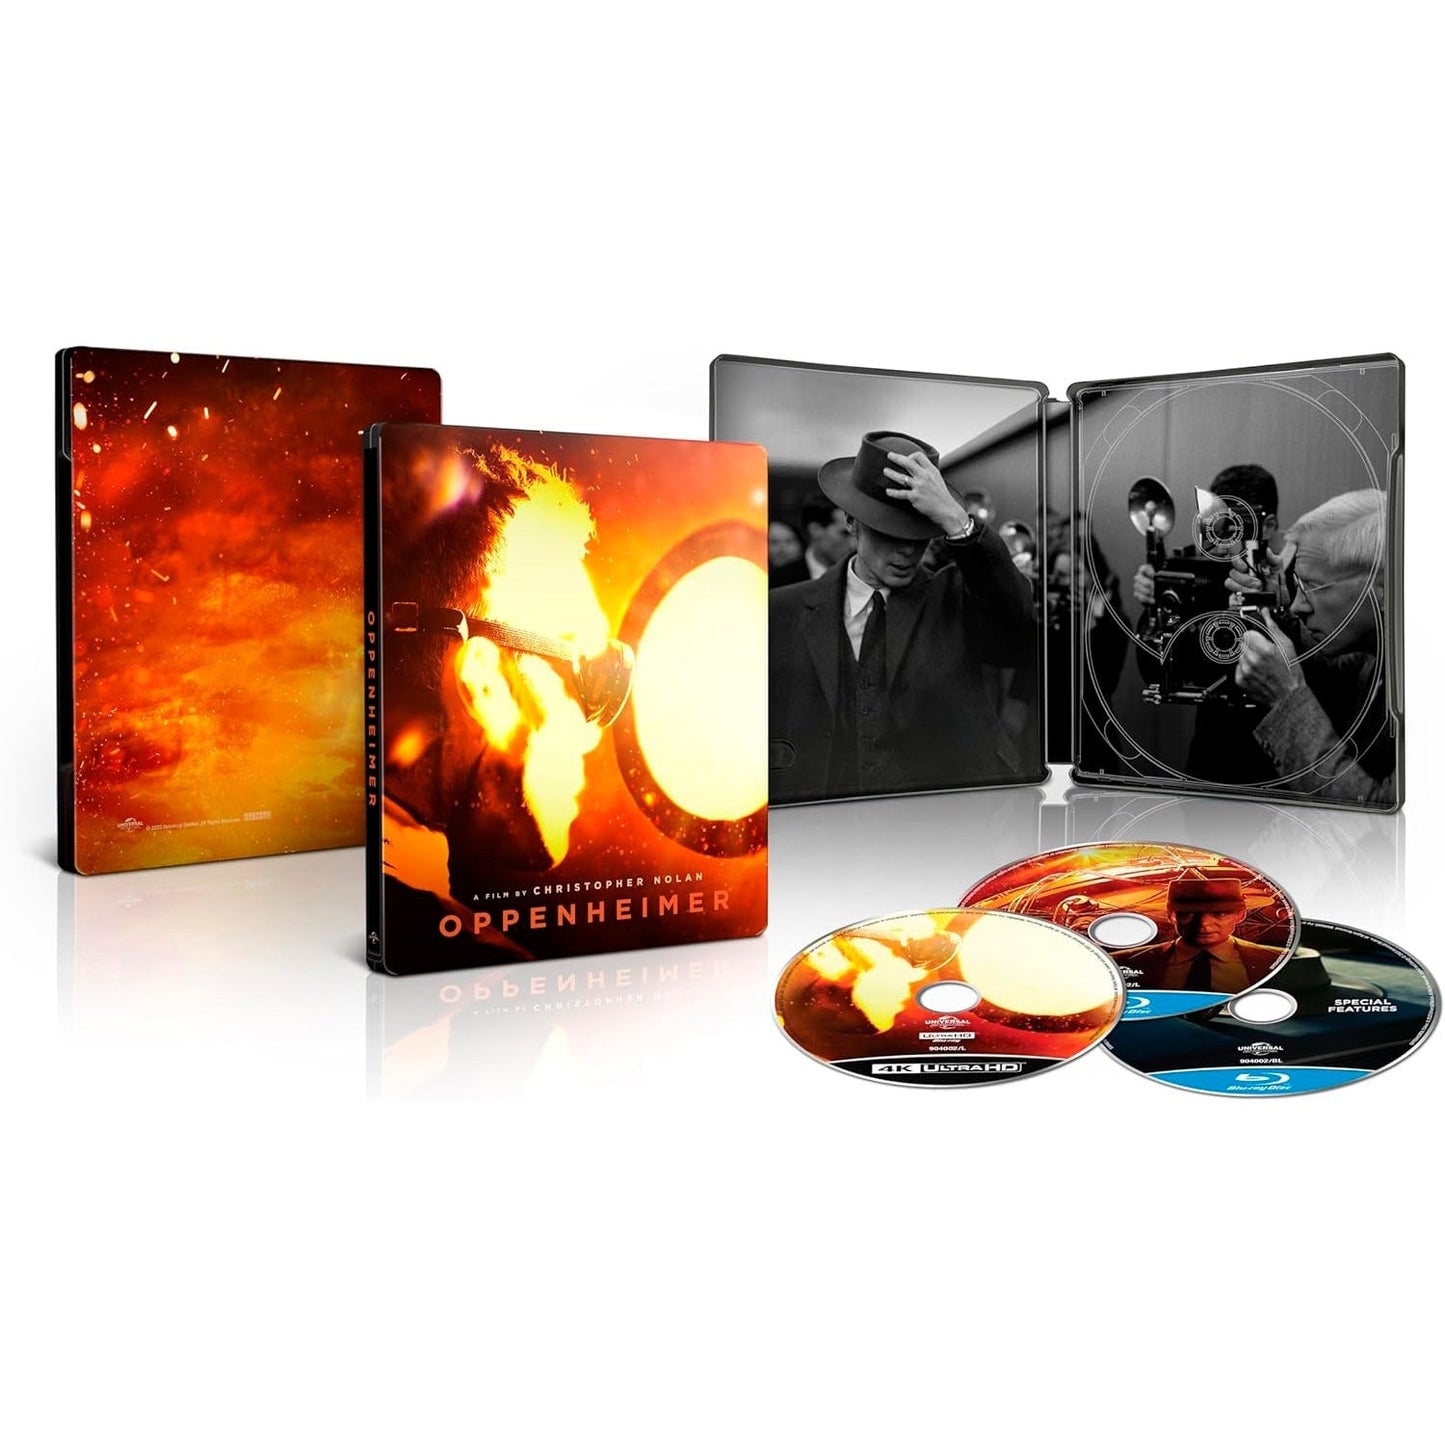 Oppenheimer UHD+BD+Bonus 3 Disc Steelbook(Global) Sofa Cinema│ Classic Film  / Outstanding Packaging